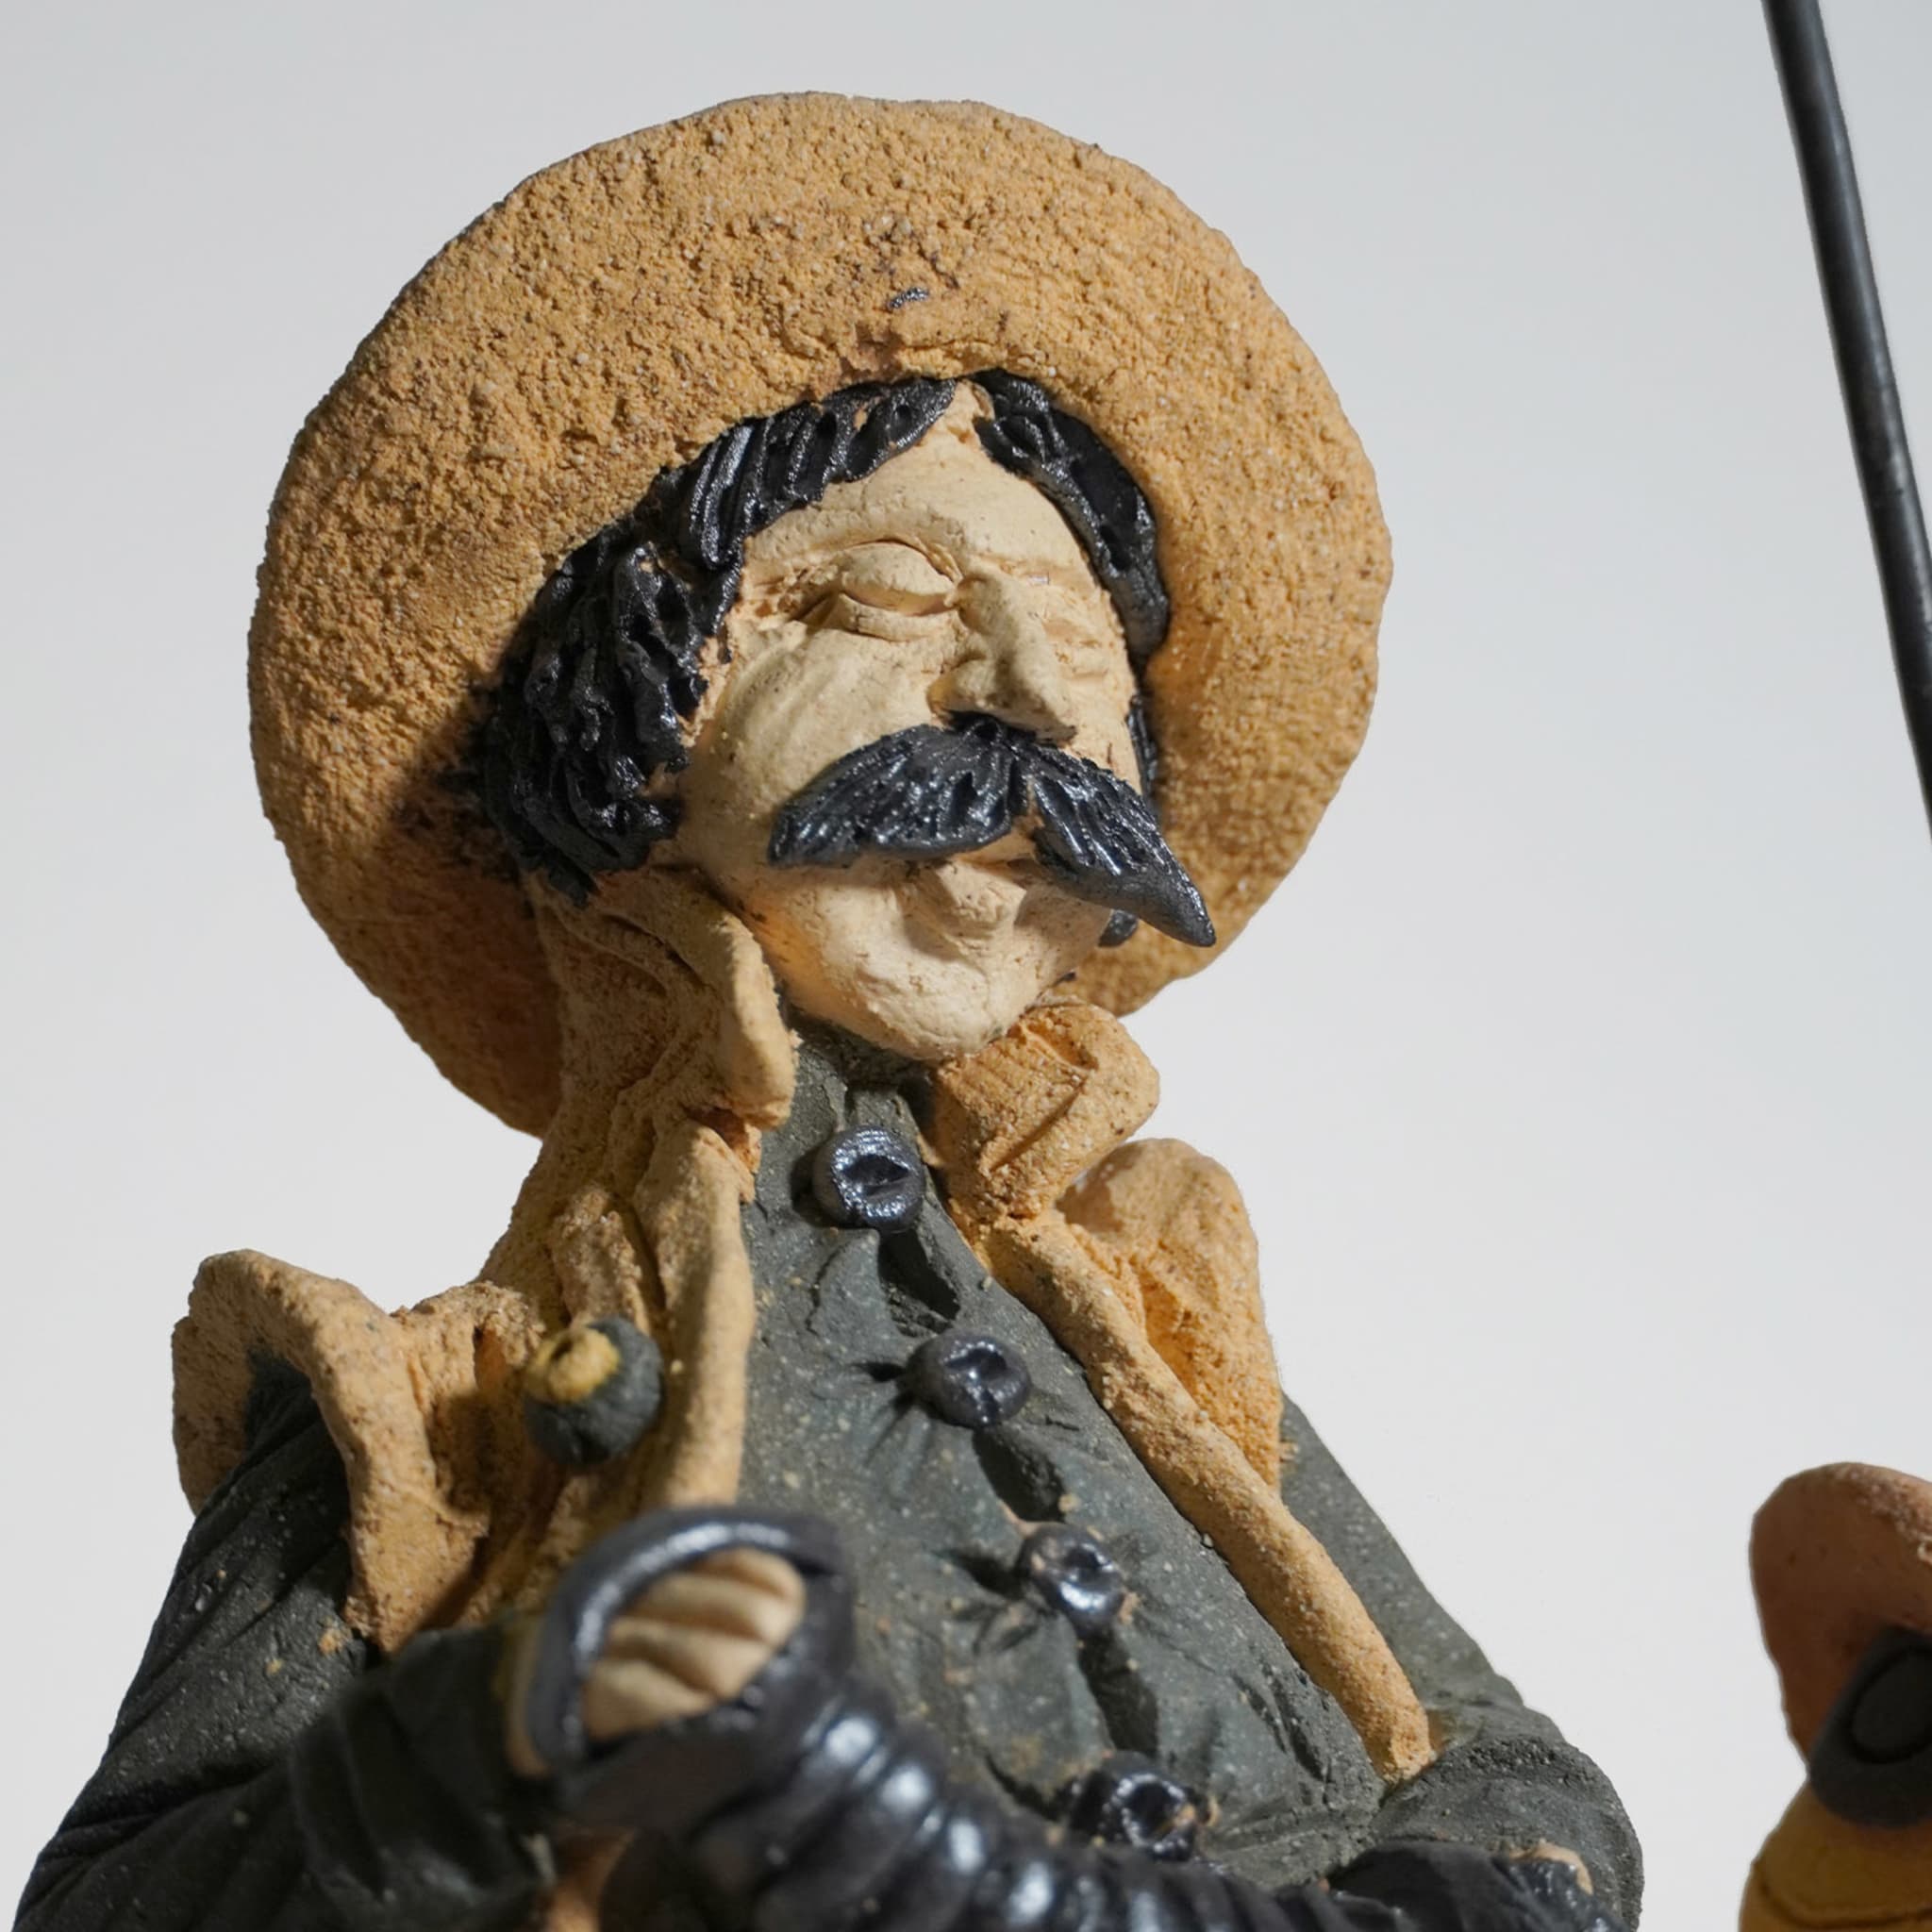 Don Quijote et Sancho Panza a Riposo Sculpture de Diego Poloniato - Vue alternative 2